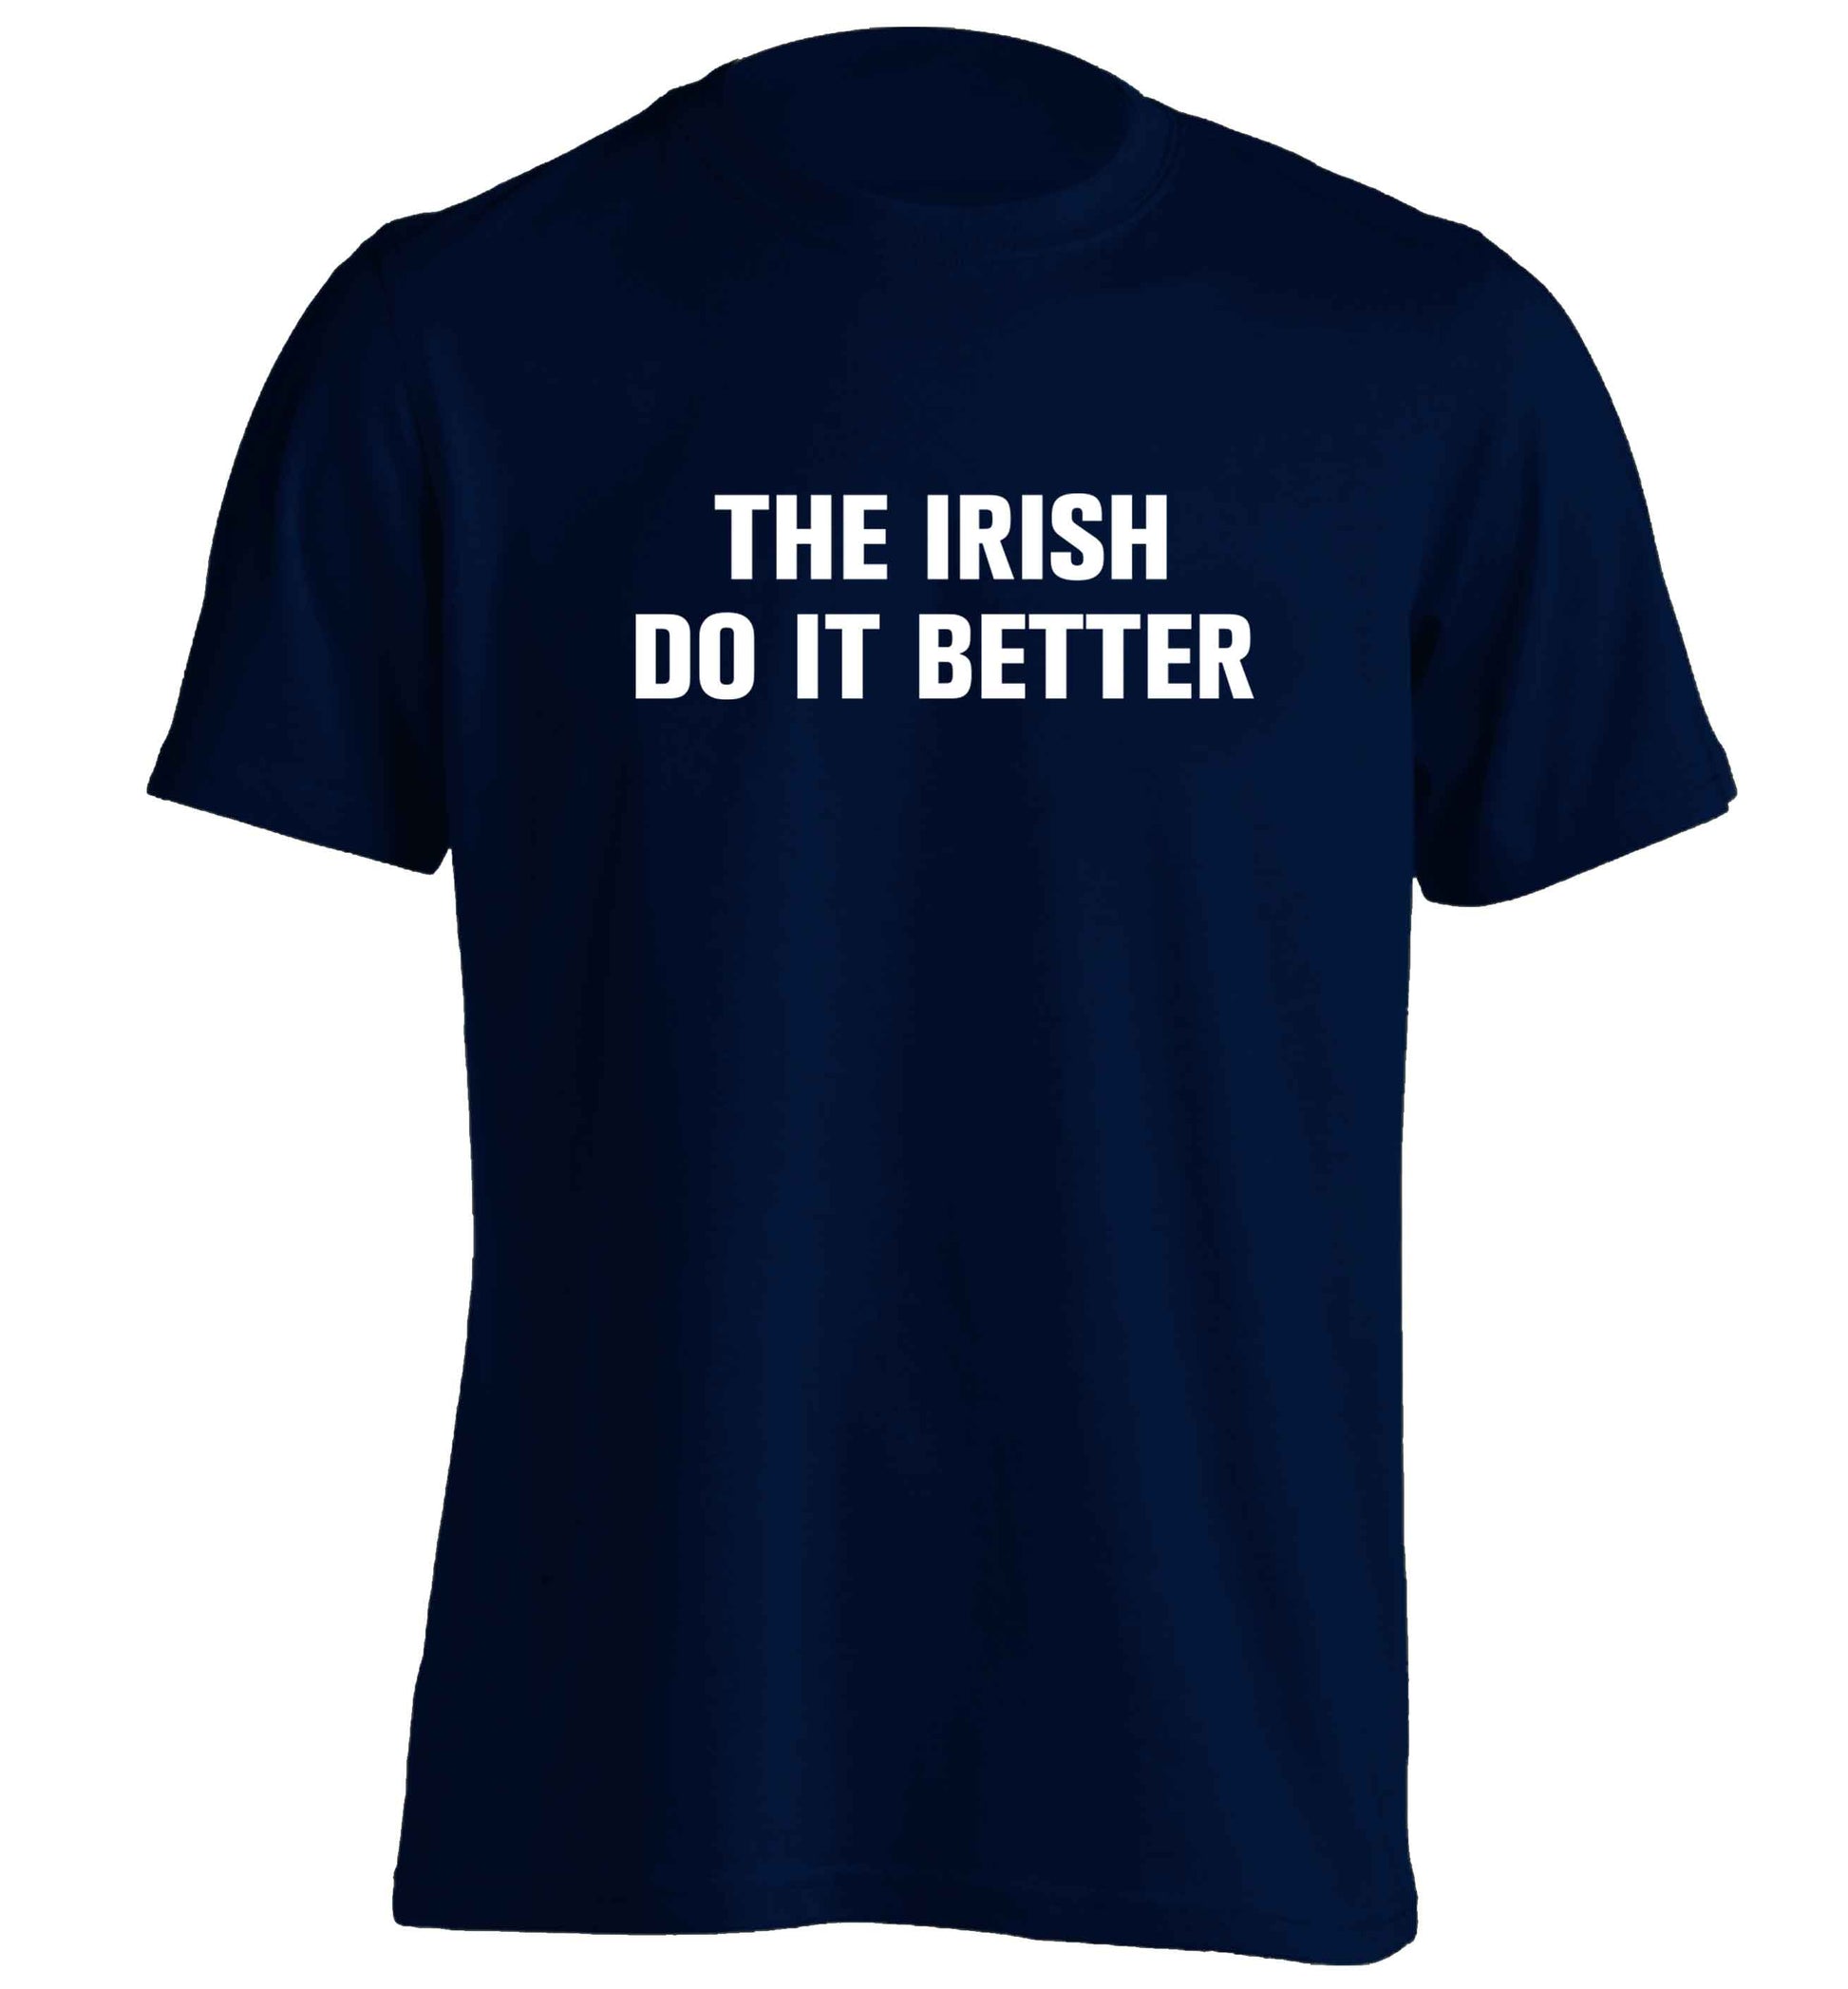 The Irish do it better adults unisex navy Tshirt 2XL